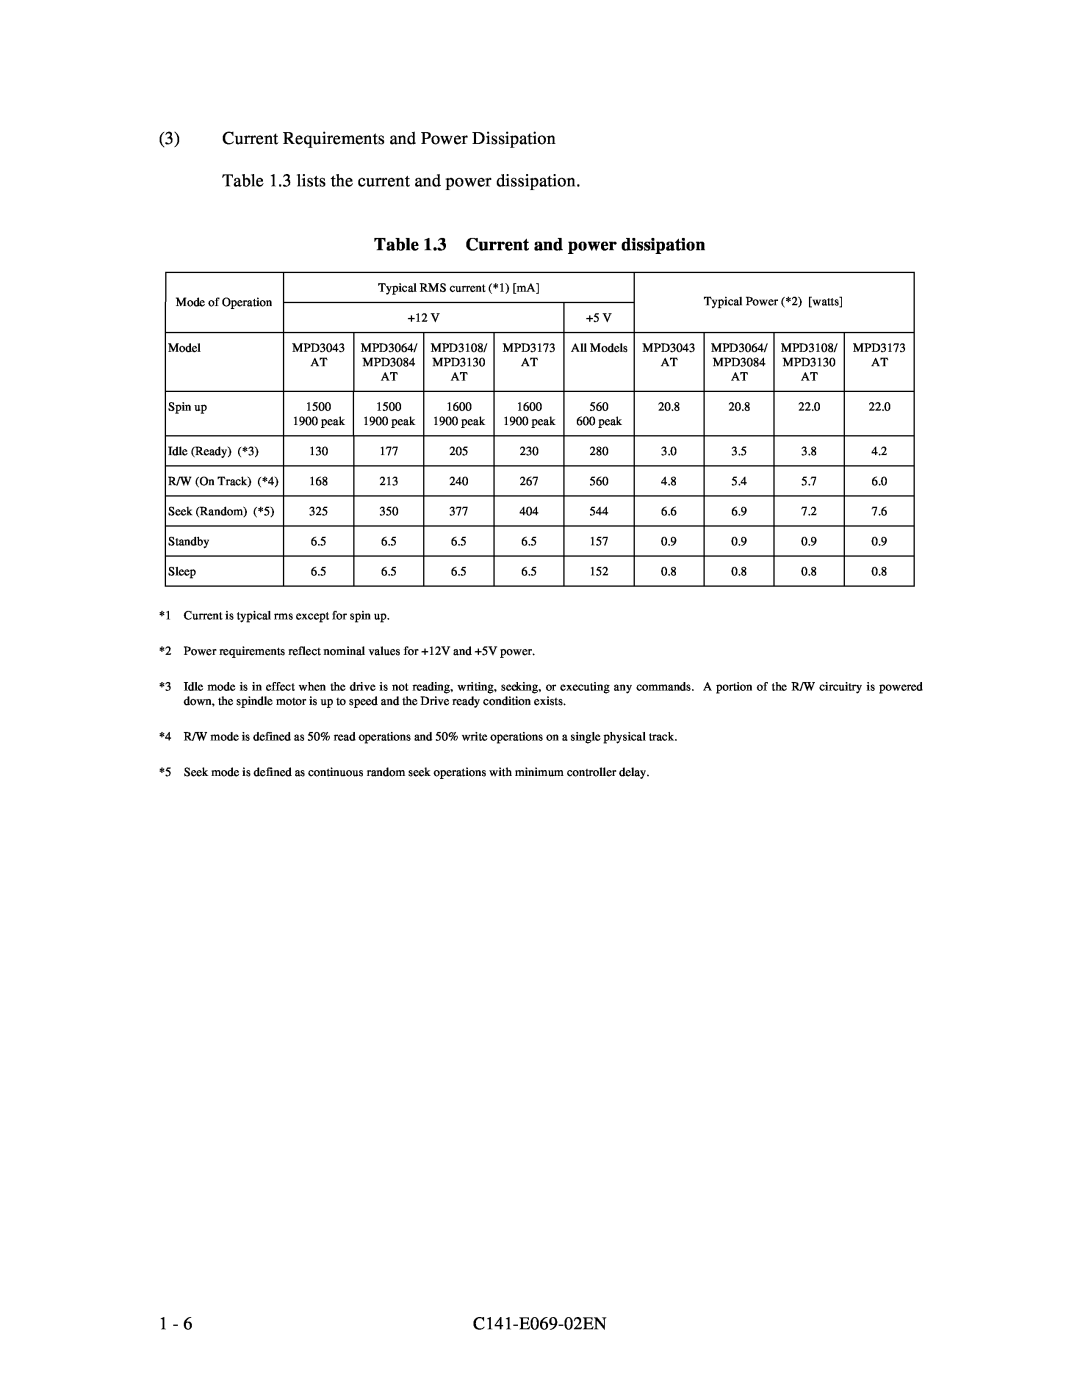 Fujitsu MPD3XXXAT manual 3 Current and power dissipation, C141-E069-02EN 